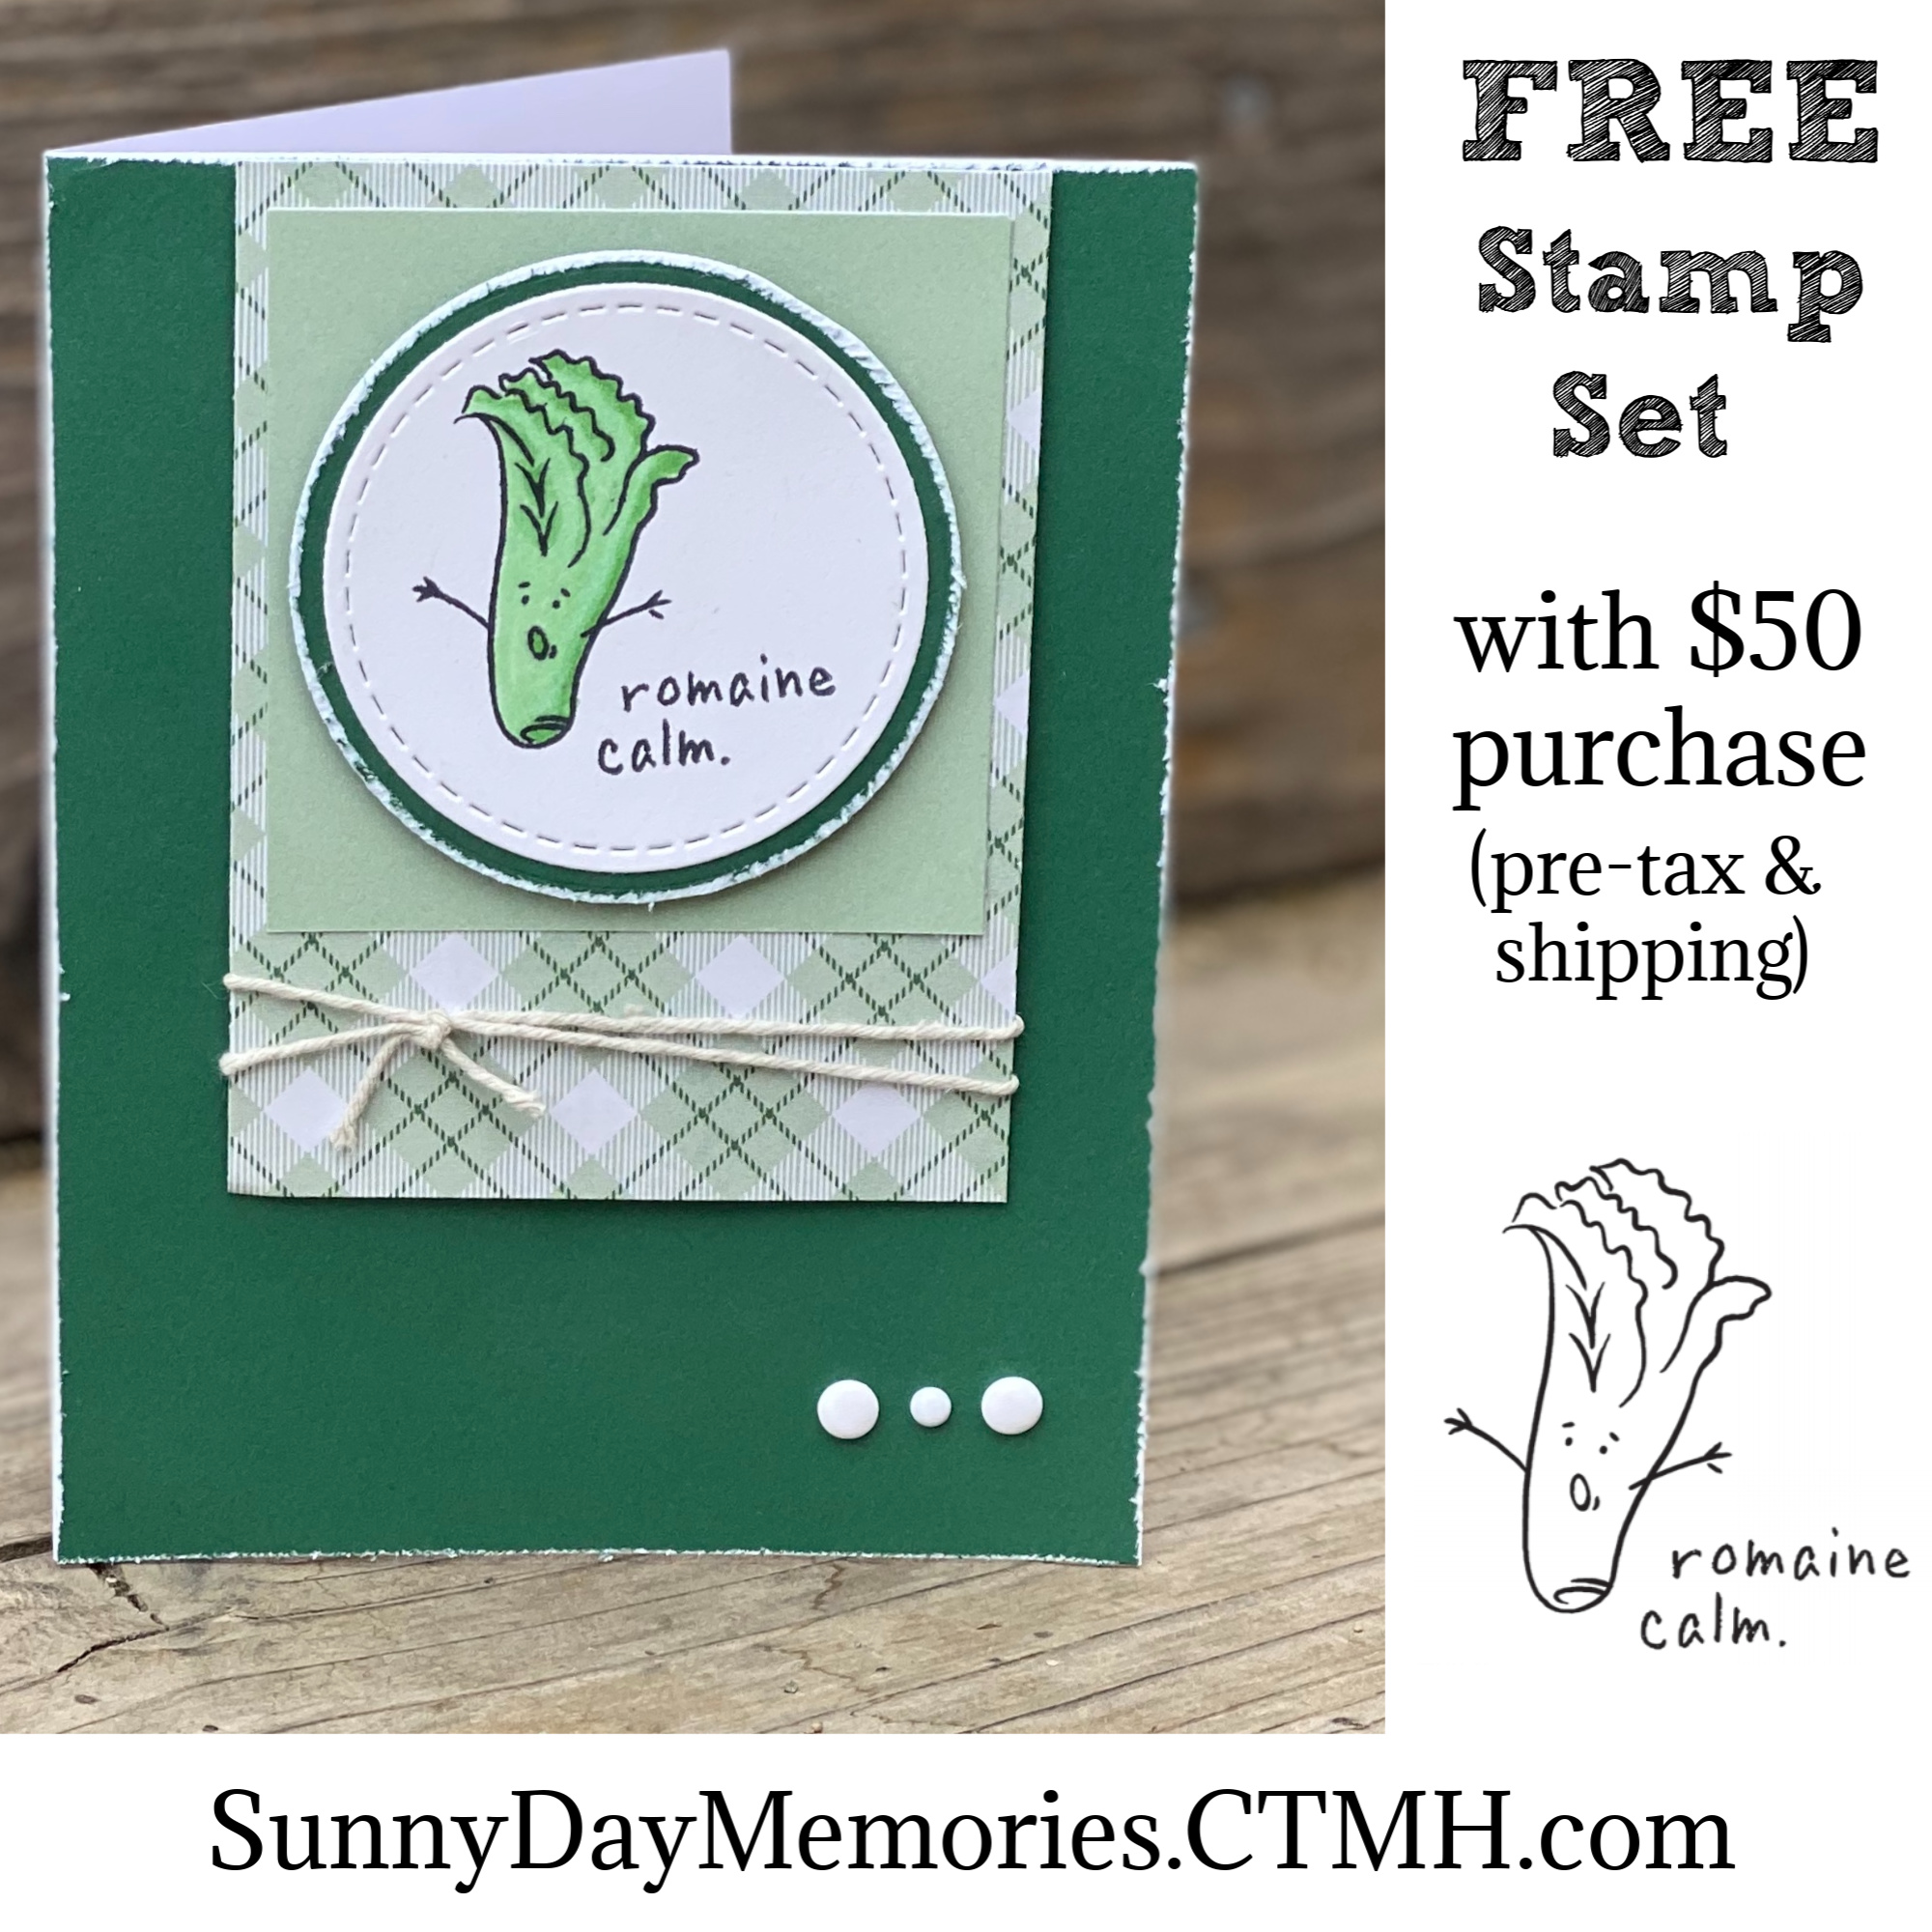 CTMH FREE Stamp Set Offer